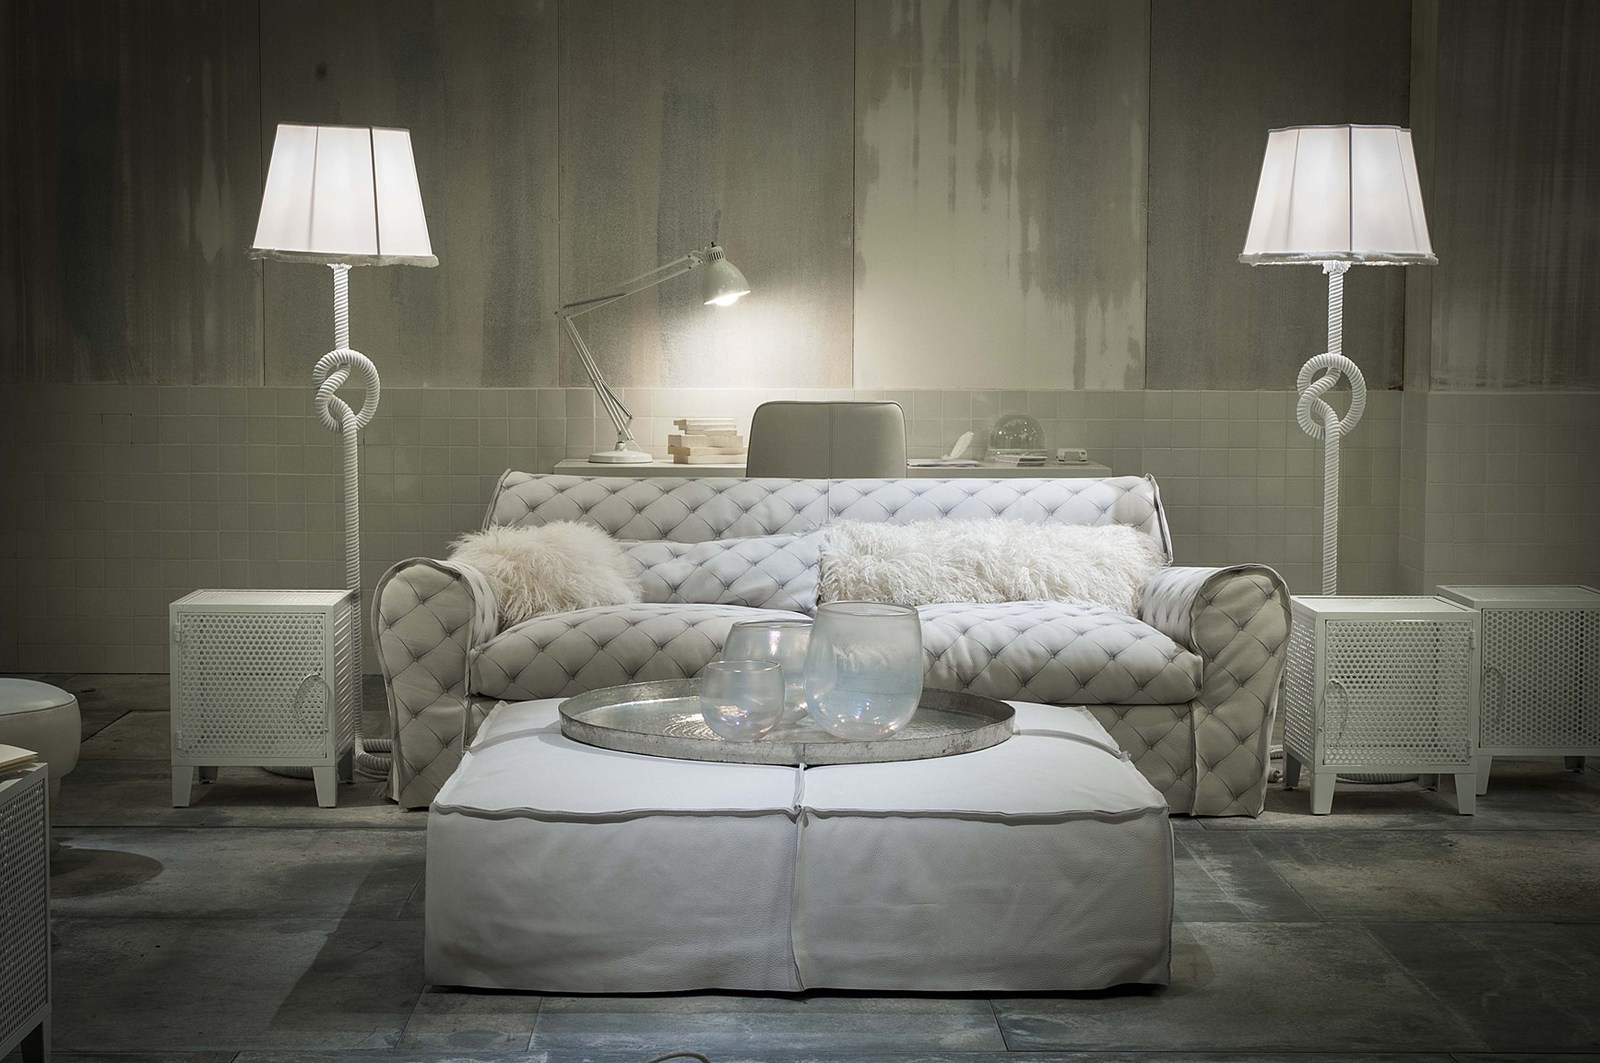 paola-navone-designs-white-fairy-tale-interiors-latest-furniture-baxter-4.jpg